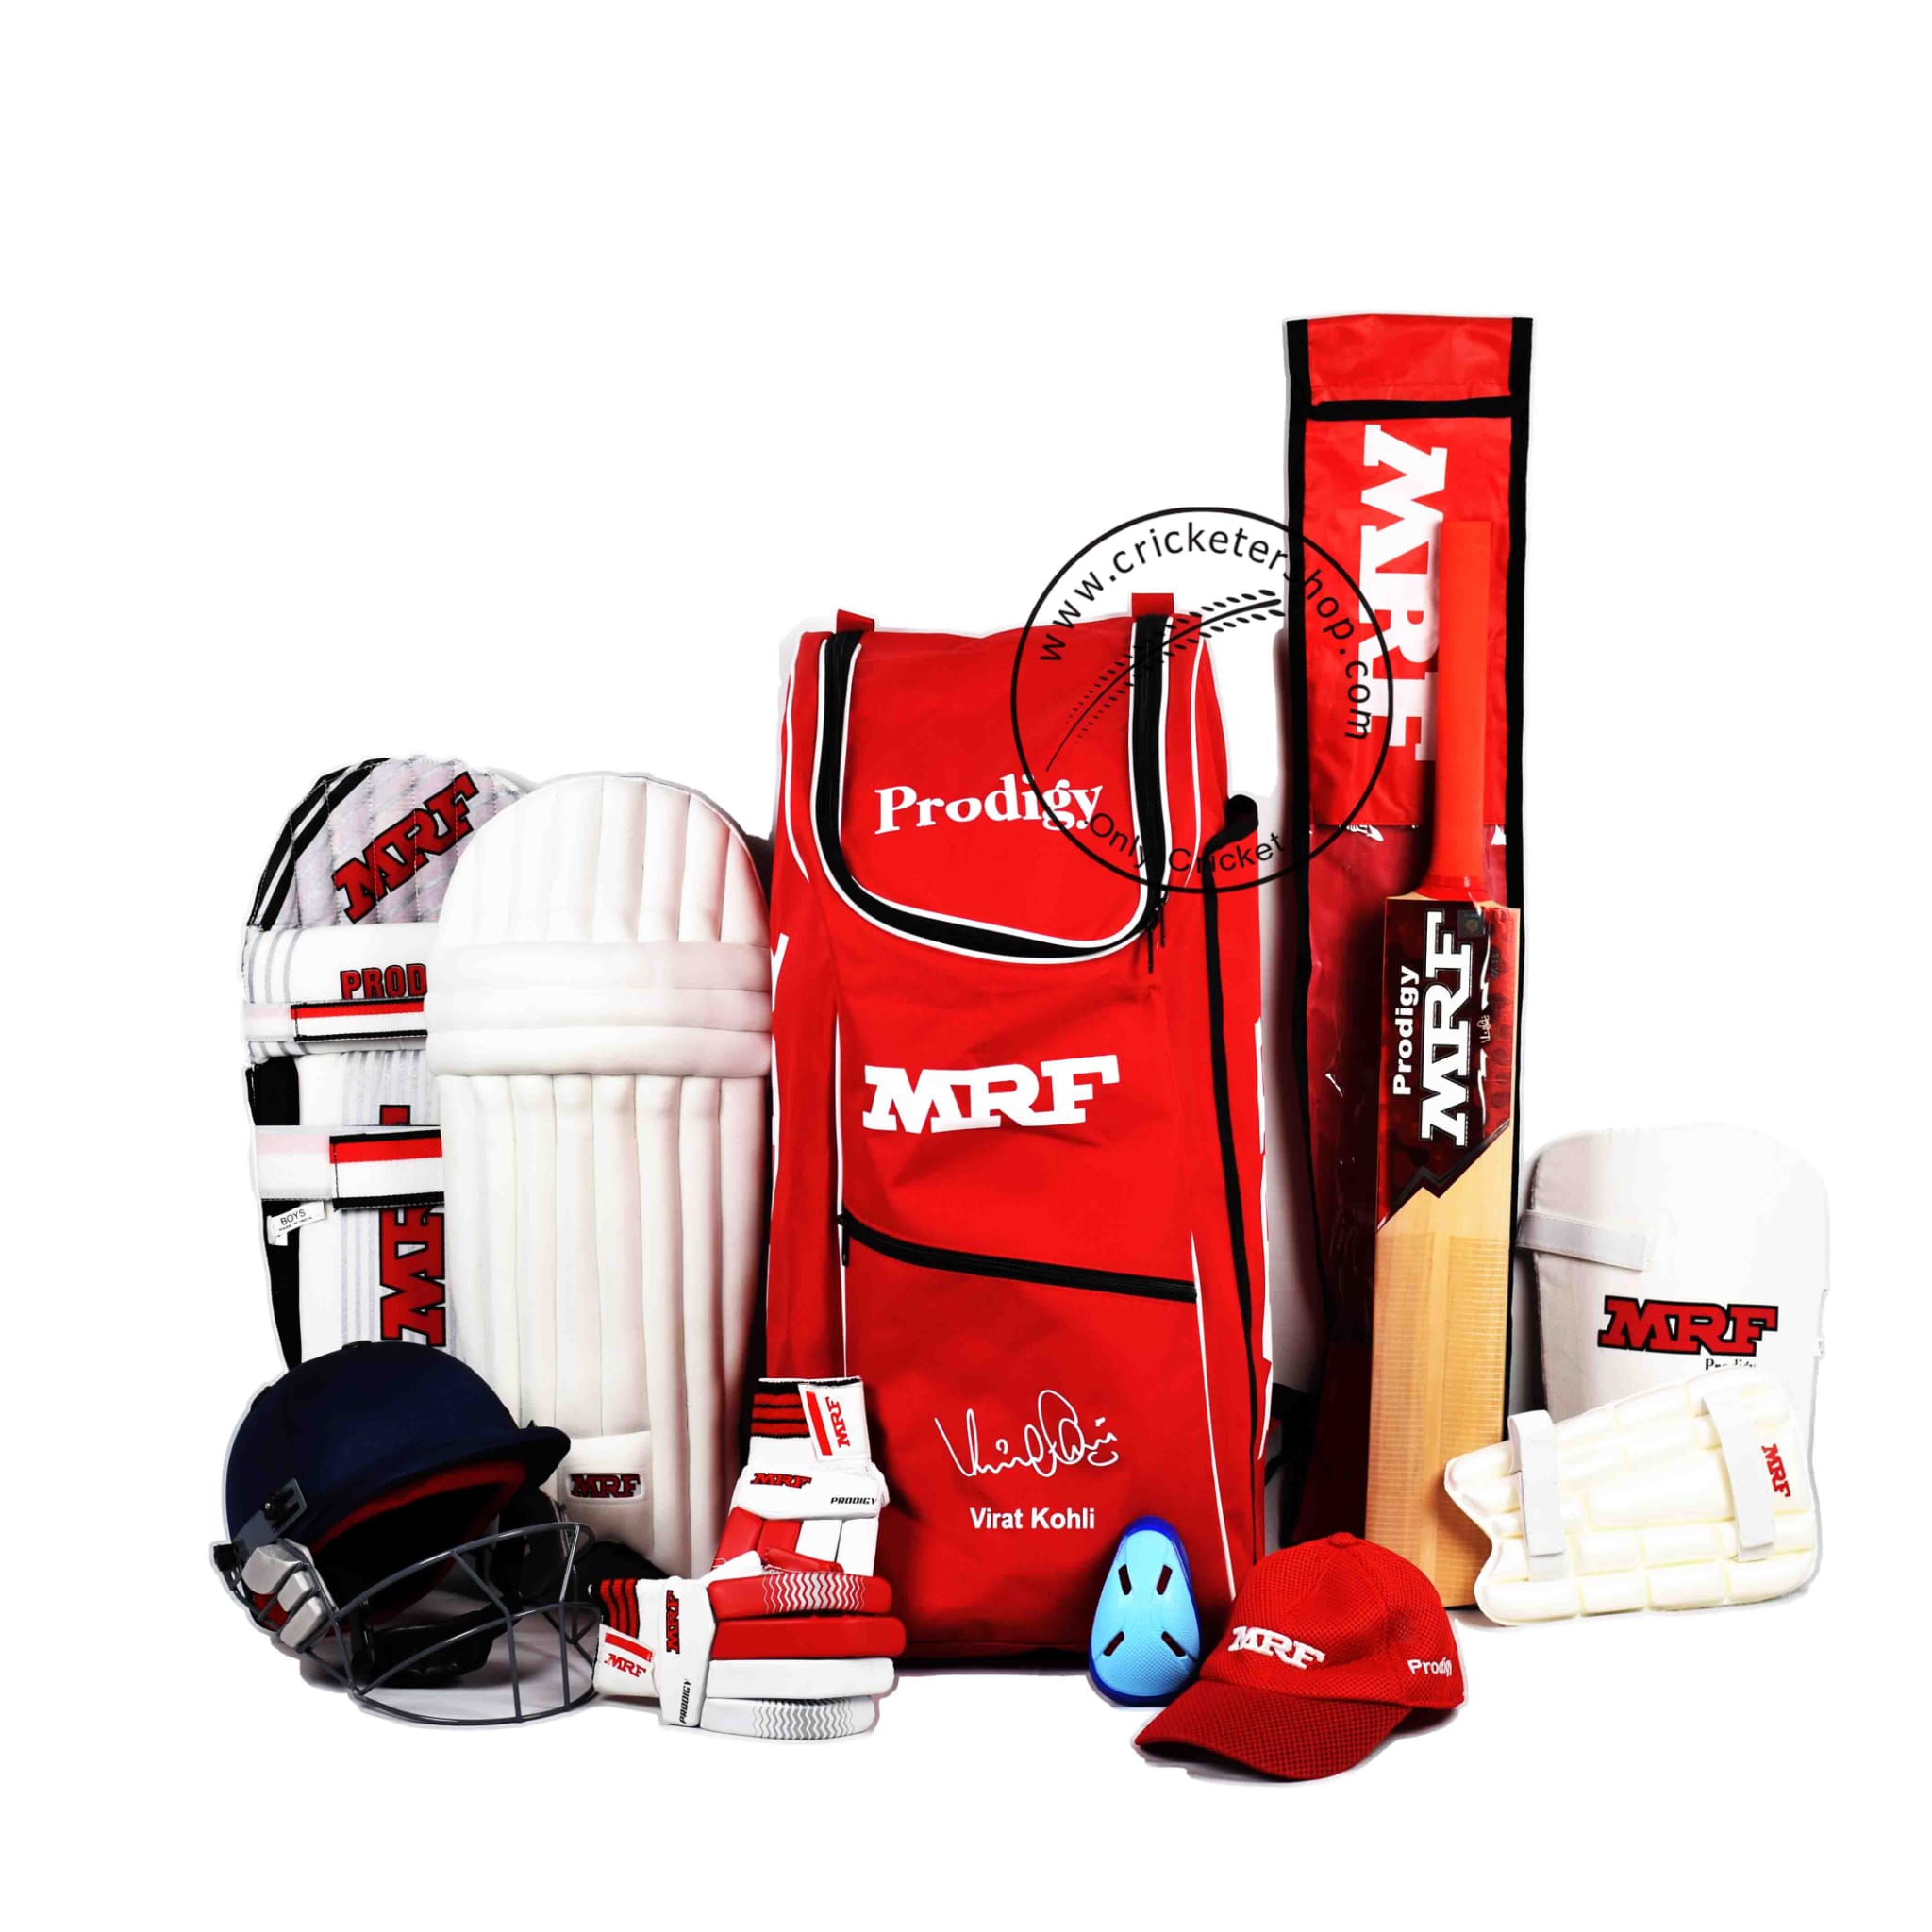 MRF Cricket Kit